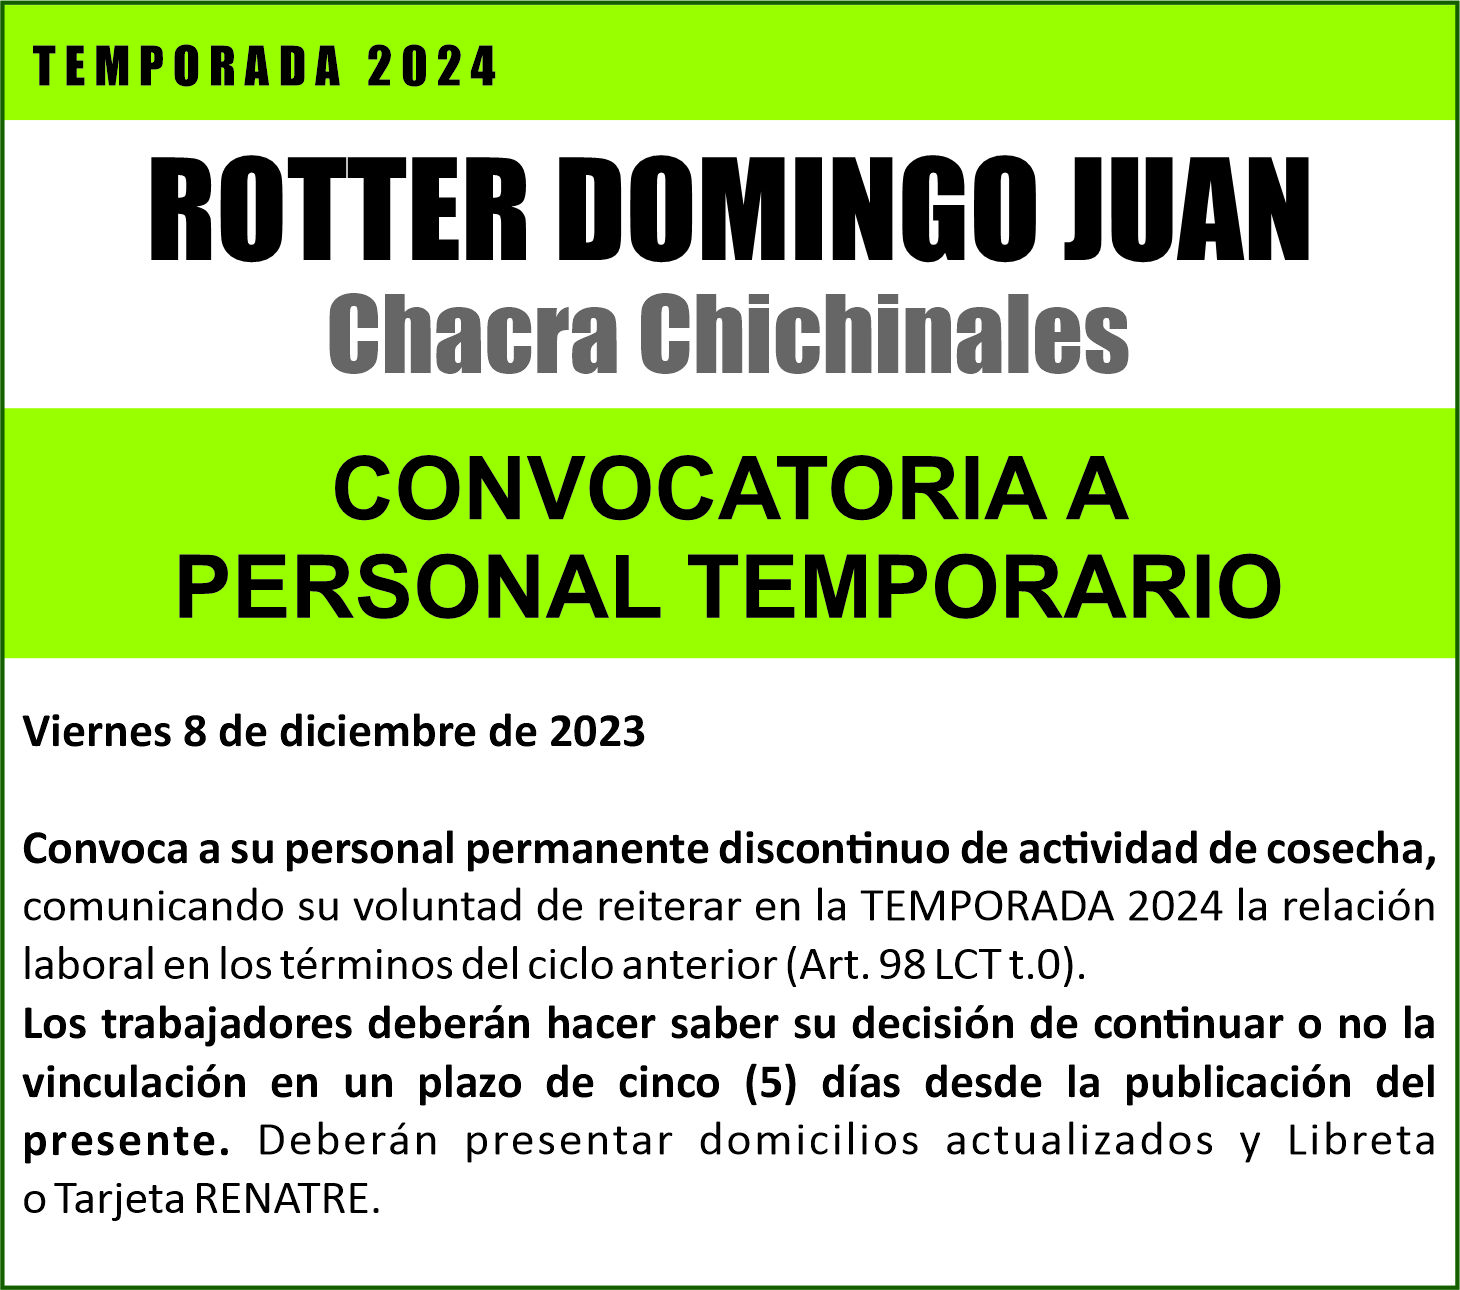 Convocatoria para Personal Temporario 2024: Rotter Domingo Juan